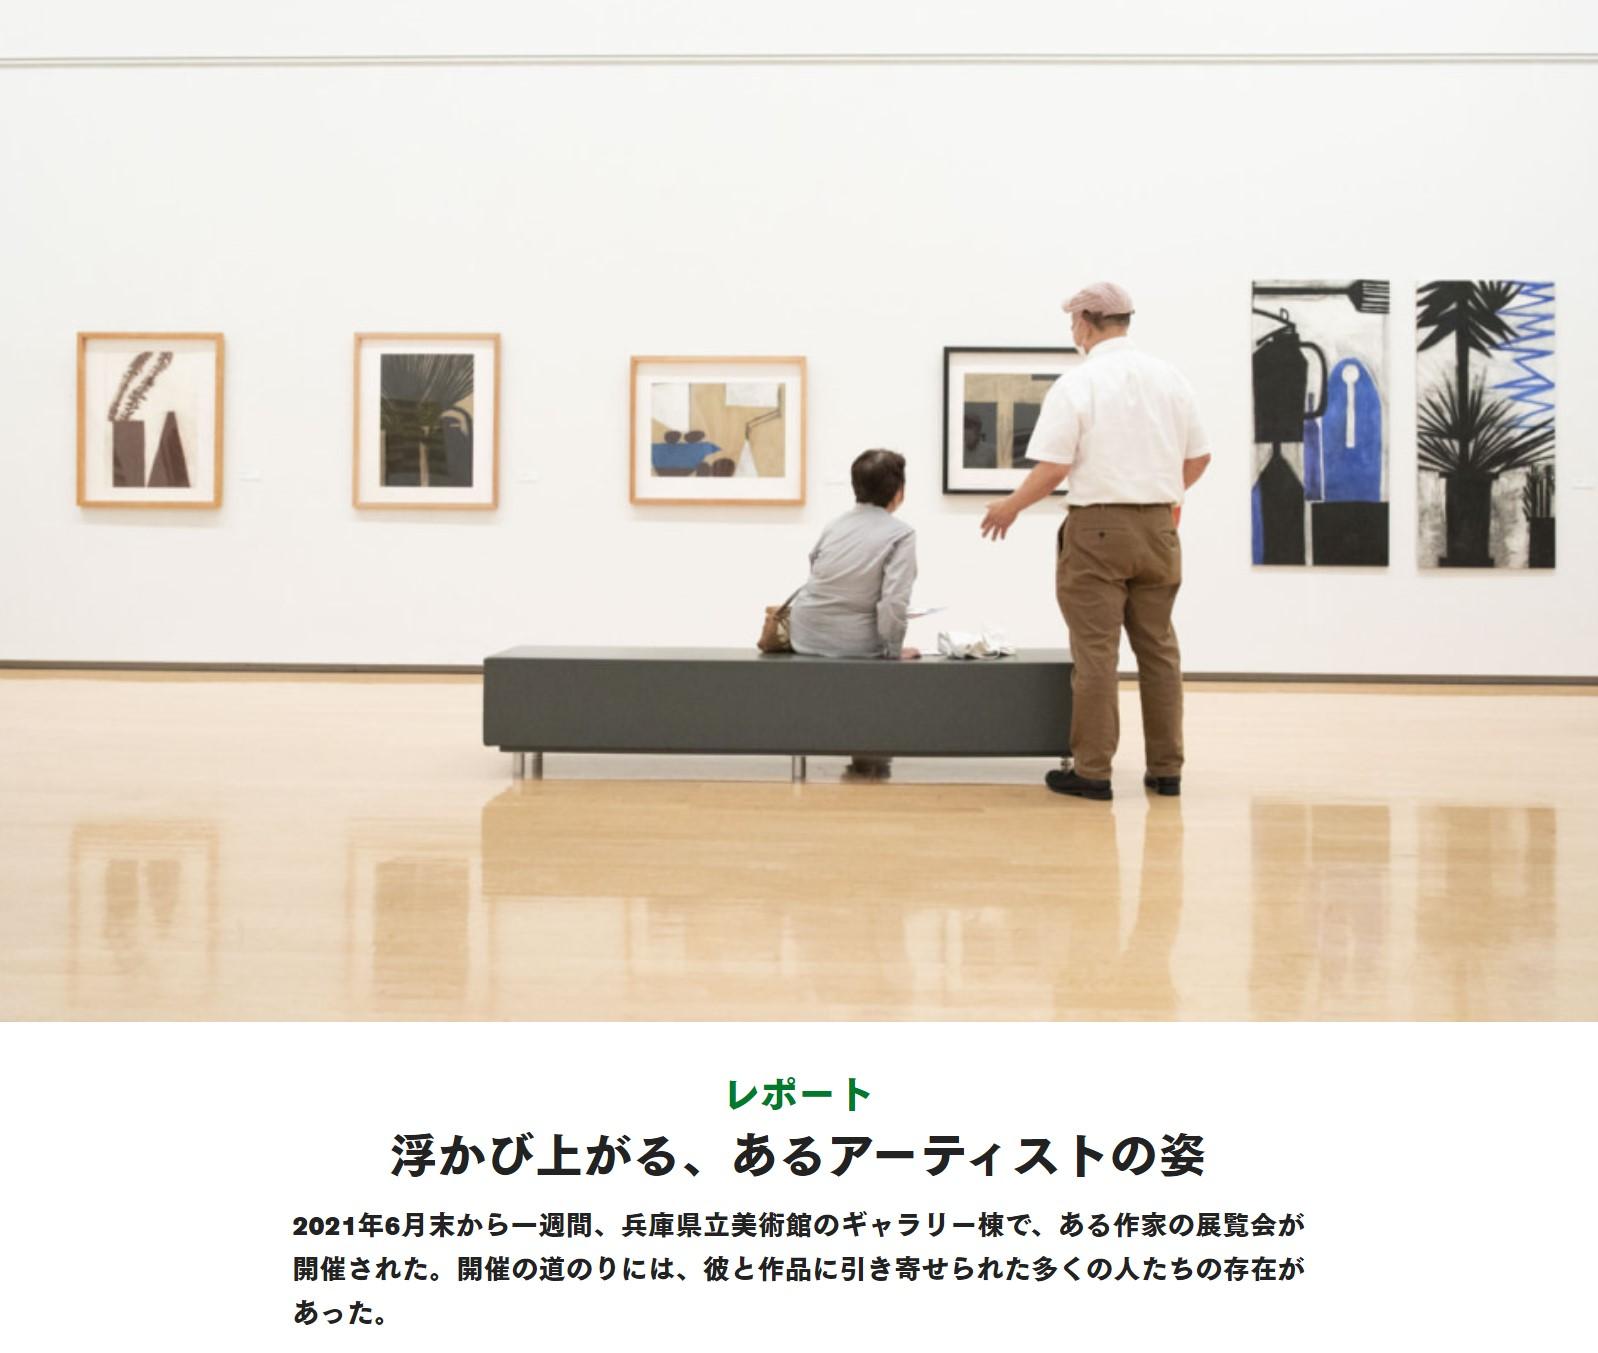 【DIVERSITY IN THE ARTS TODAY】 に掲載中の舛次崇さんと富塚純光さんの展覧会のレポート